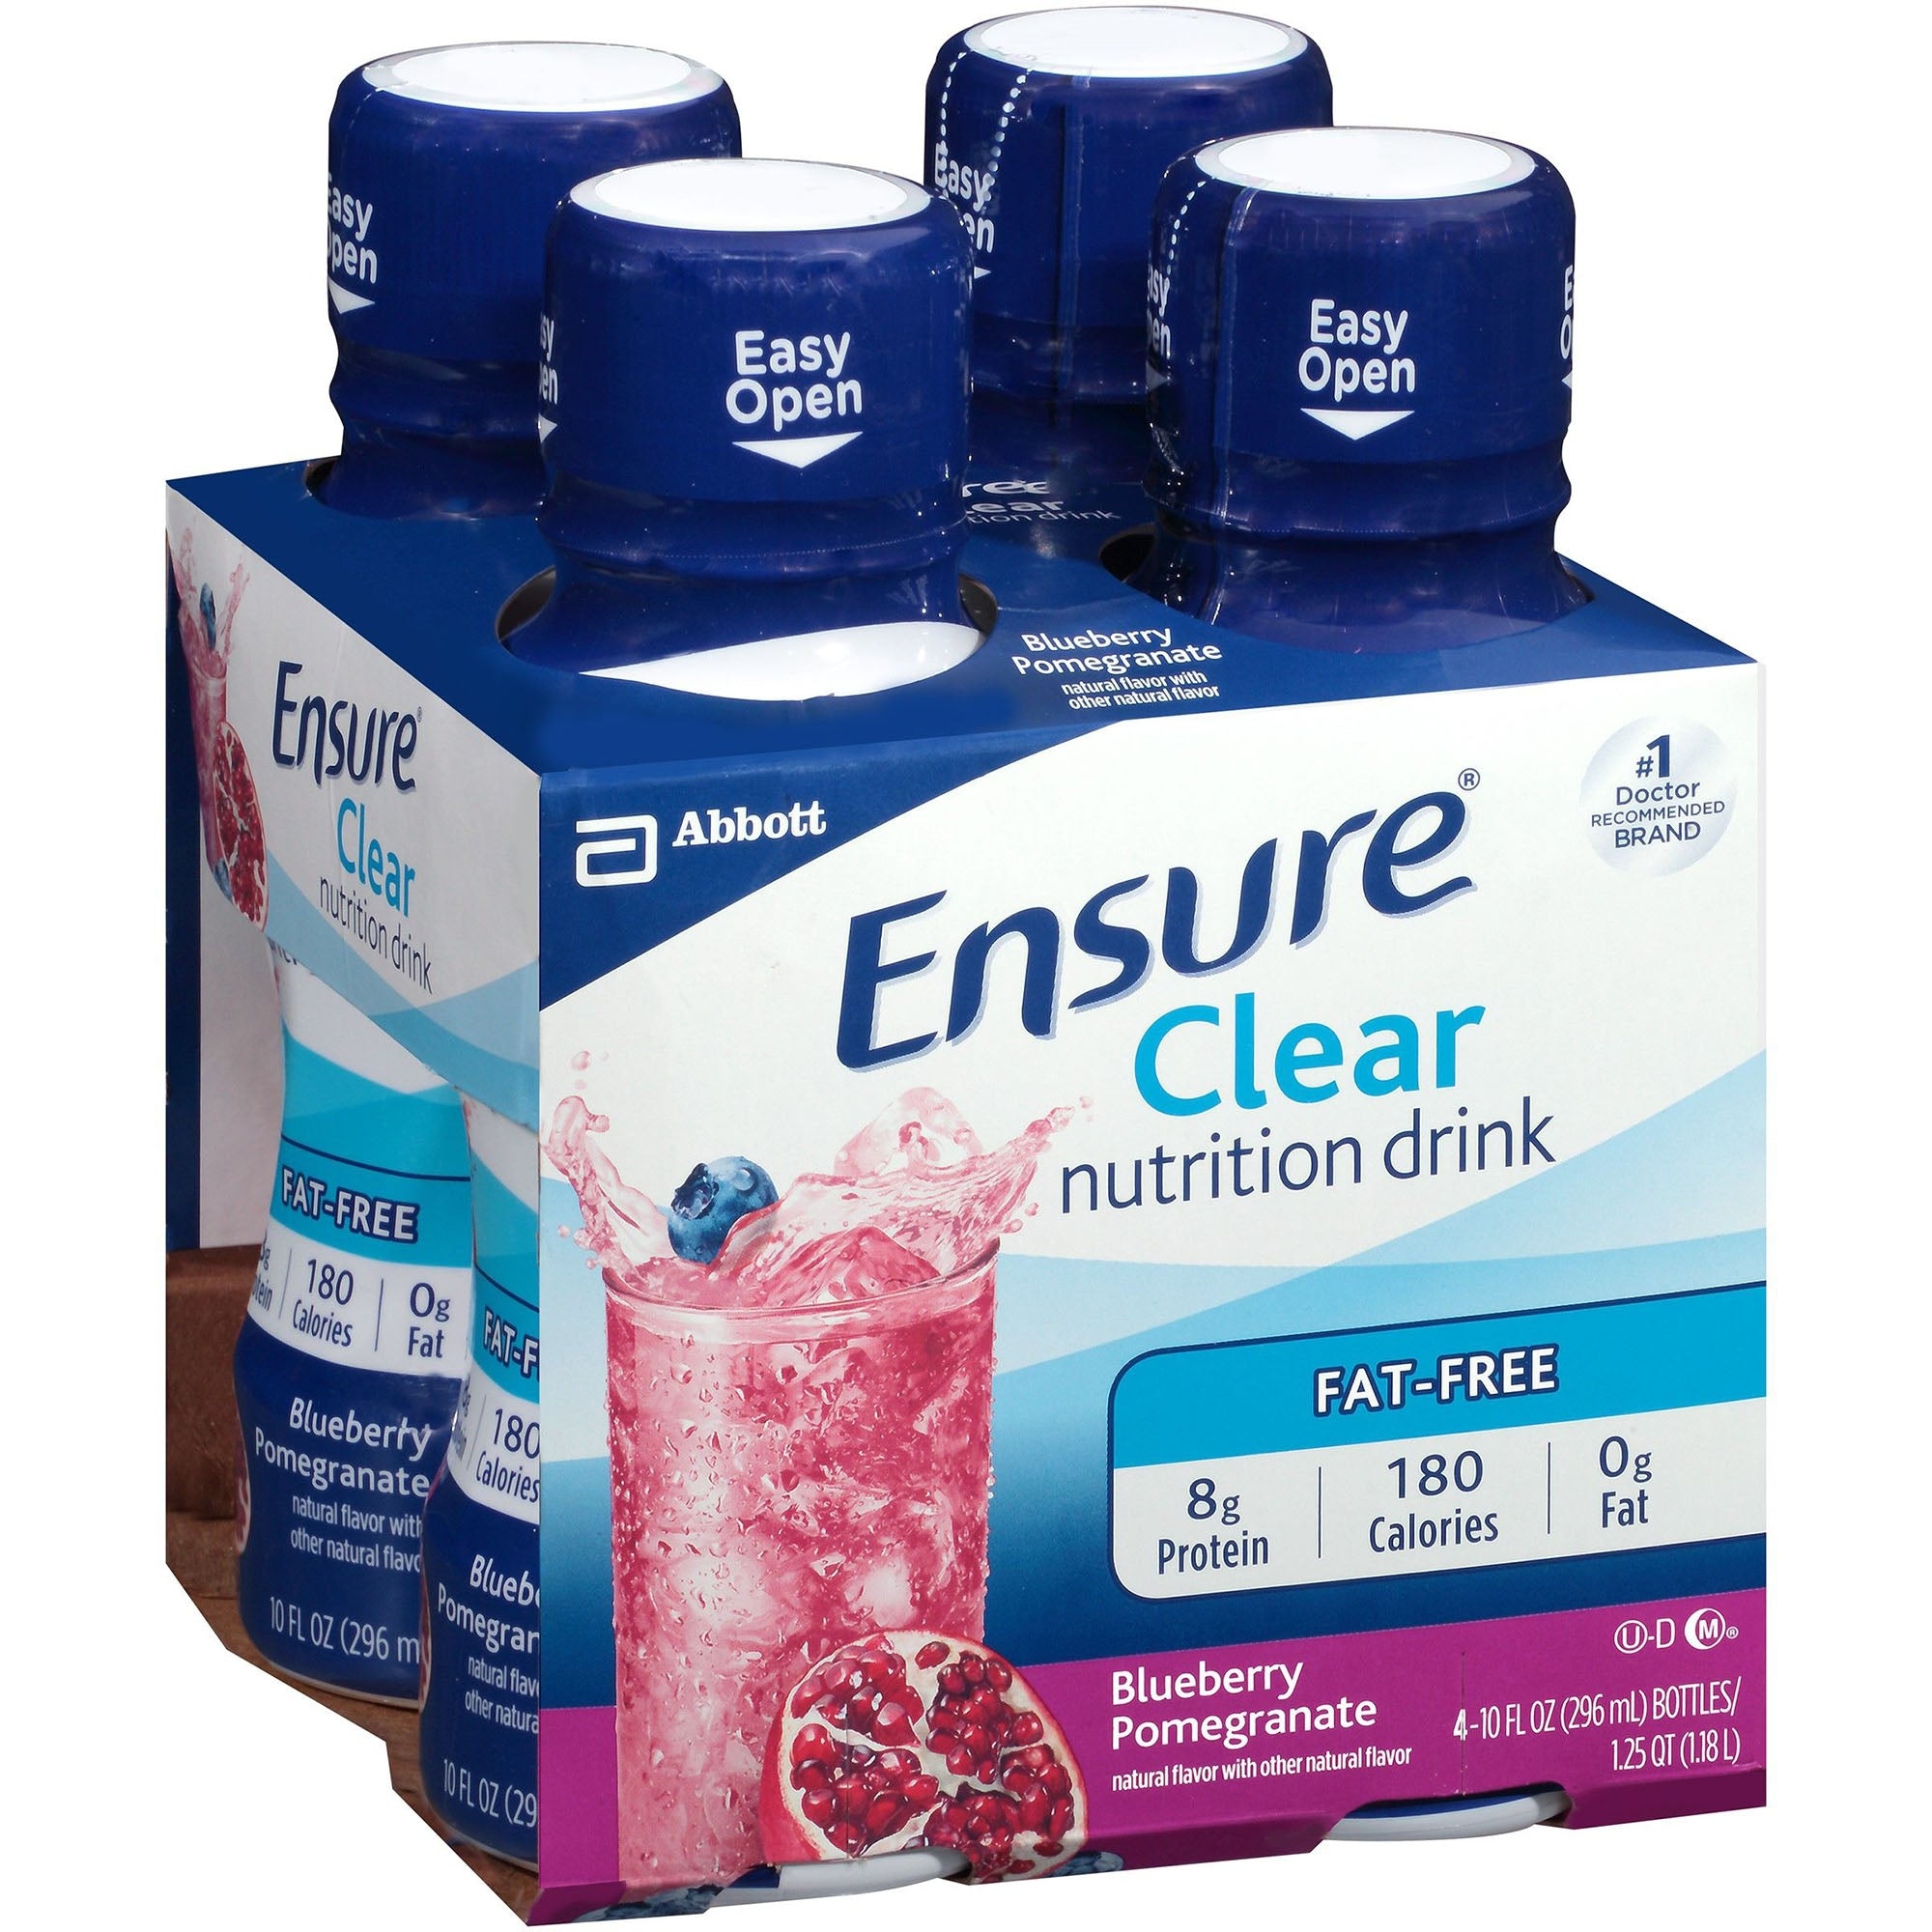 Ensure® Clear Blueberry Pomegranate Nutrition Liquid - 10oz (4 Pack)